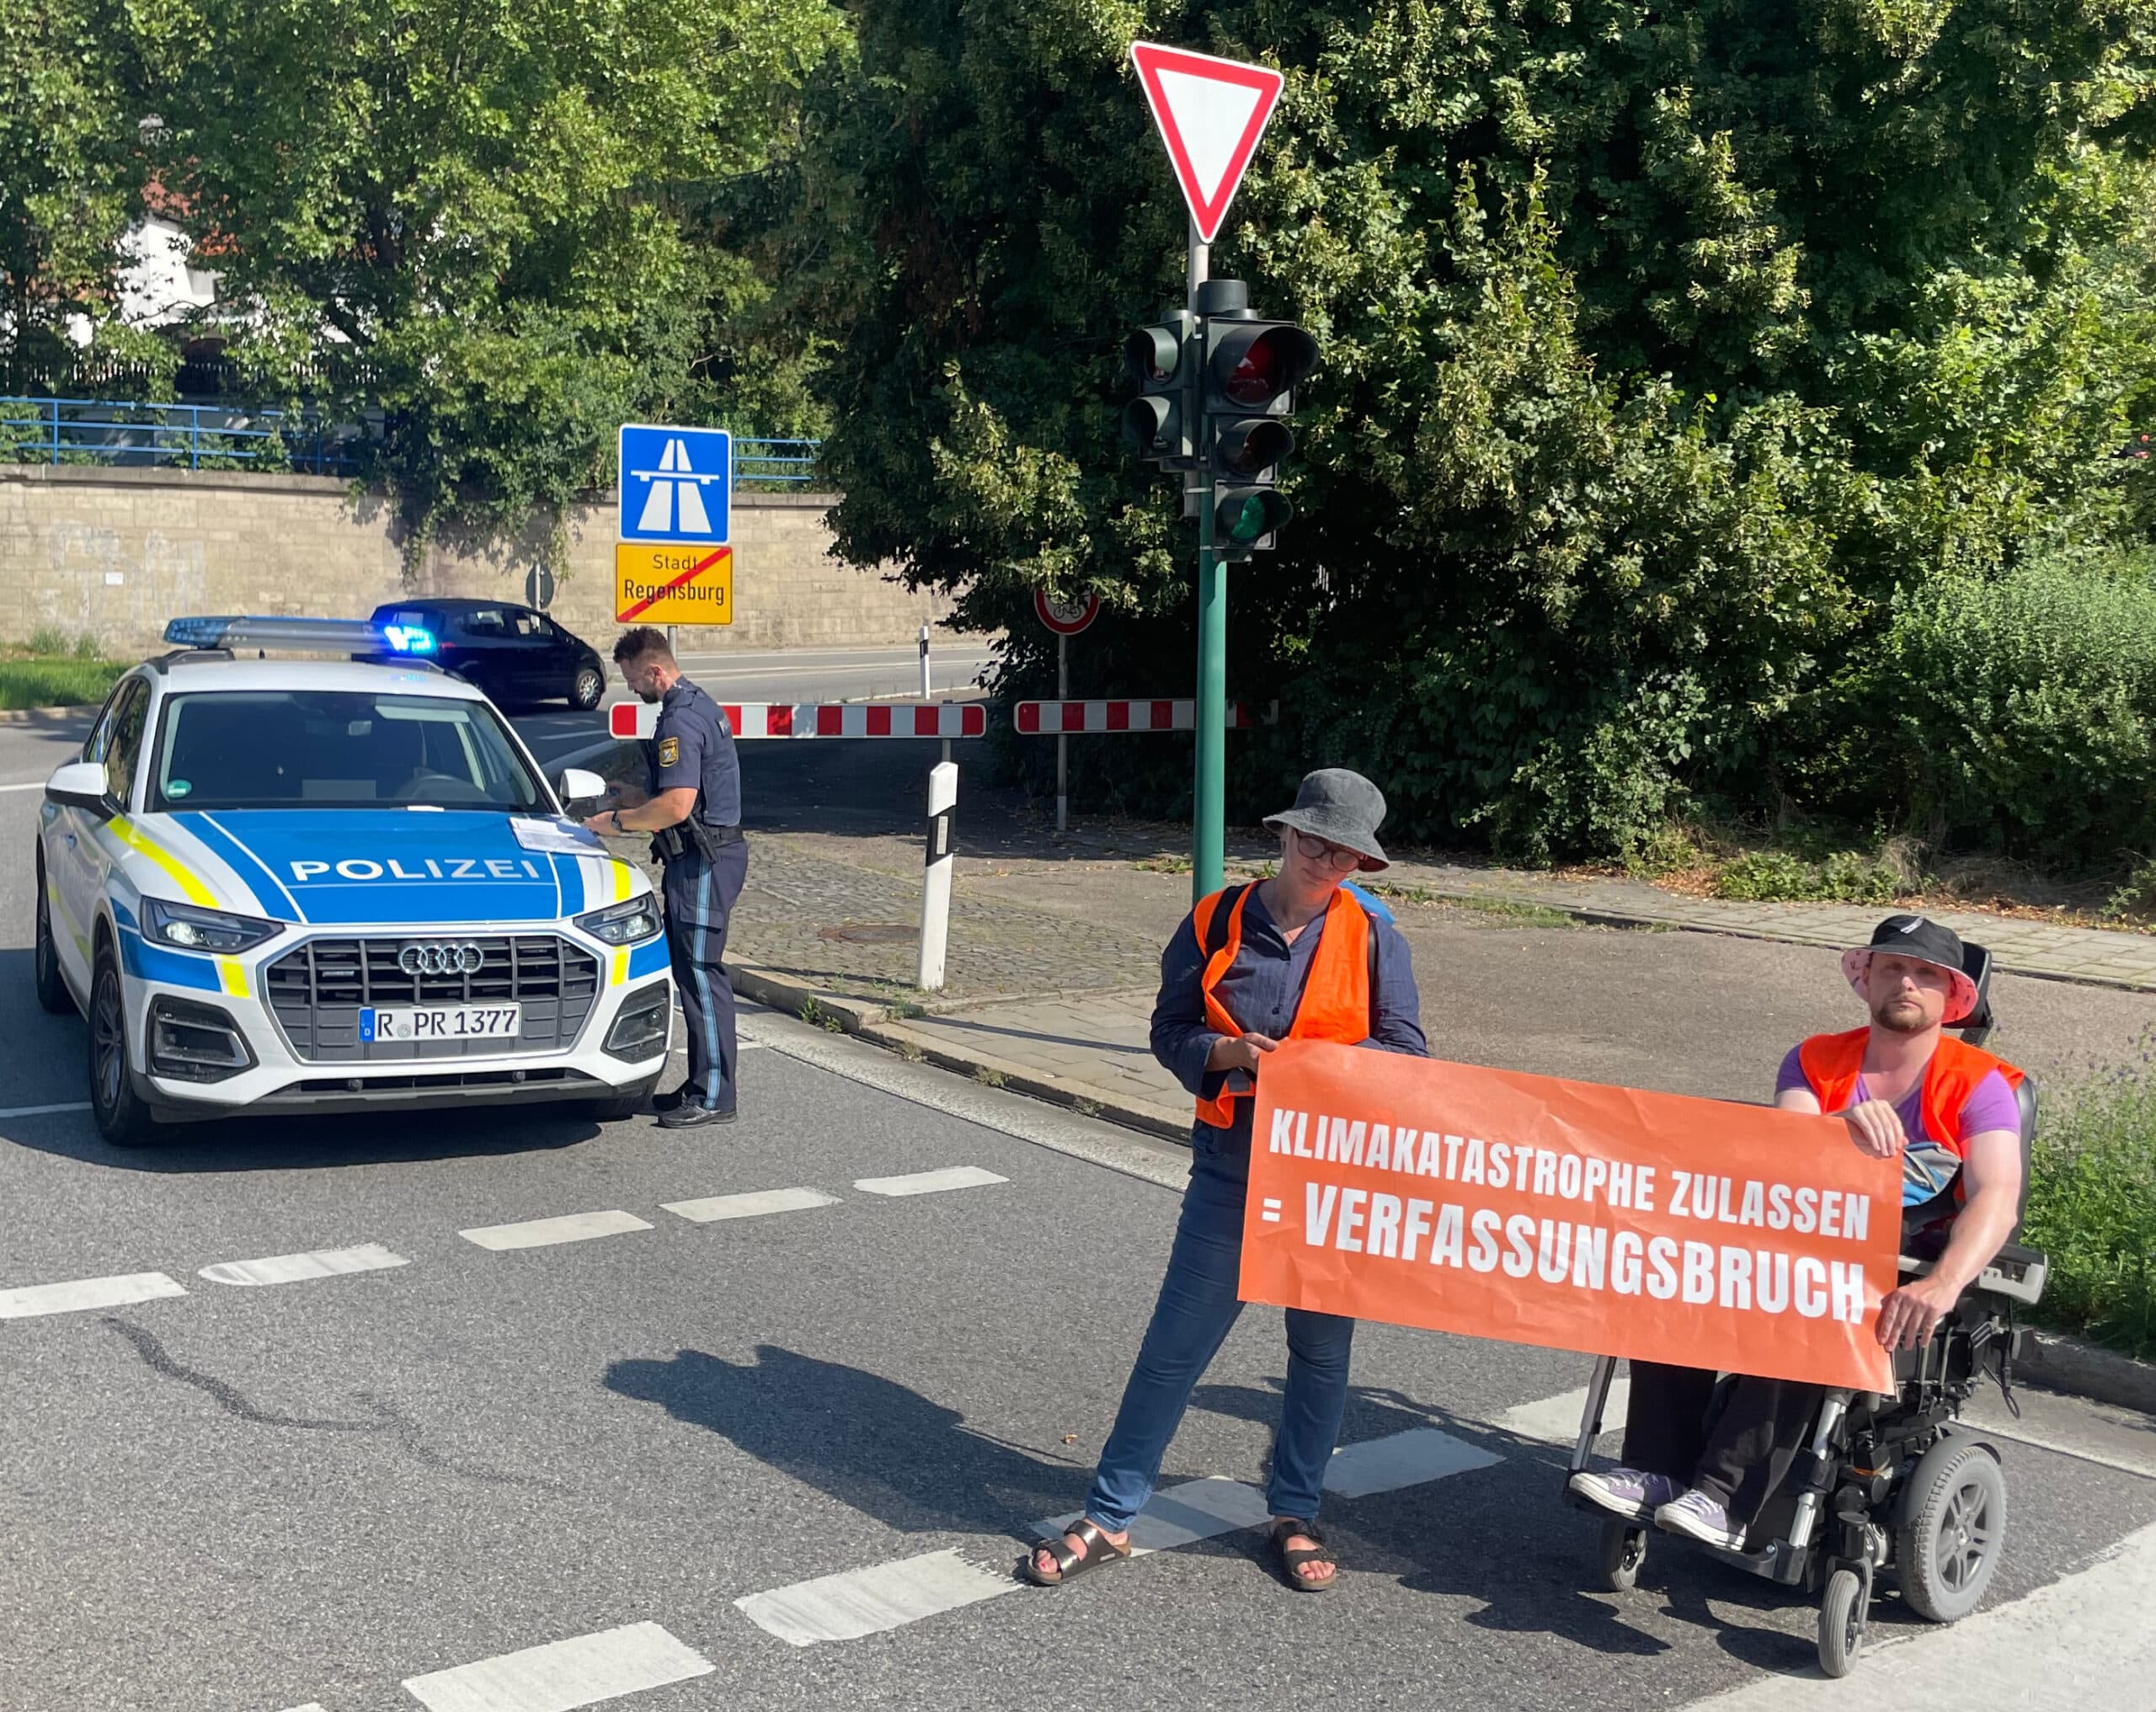 Letzte Generation protestiert in Regensburg: Zehn Verkehrsblockaden an  einem Tag » Regensburg Digital